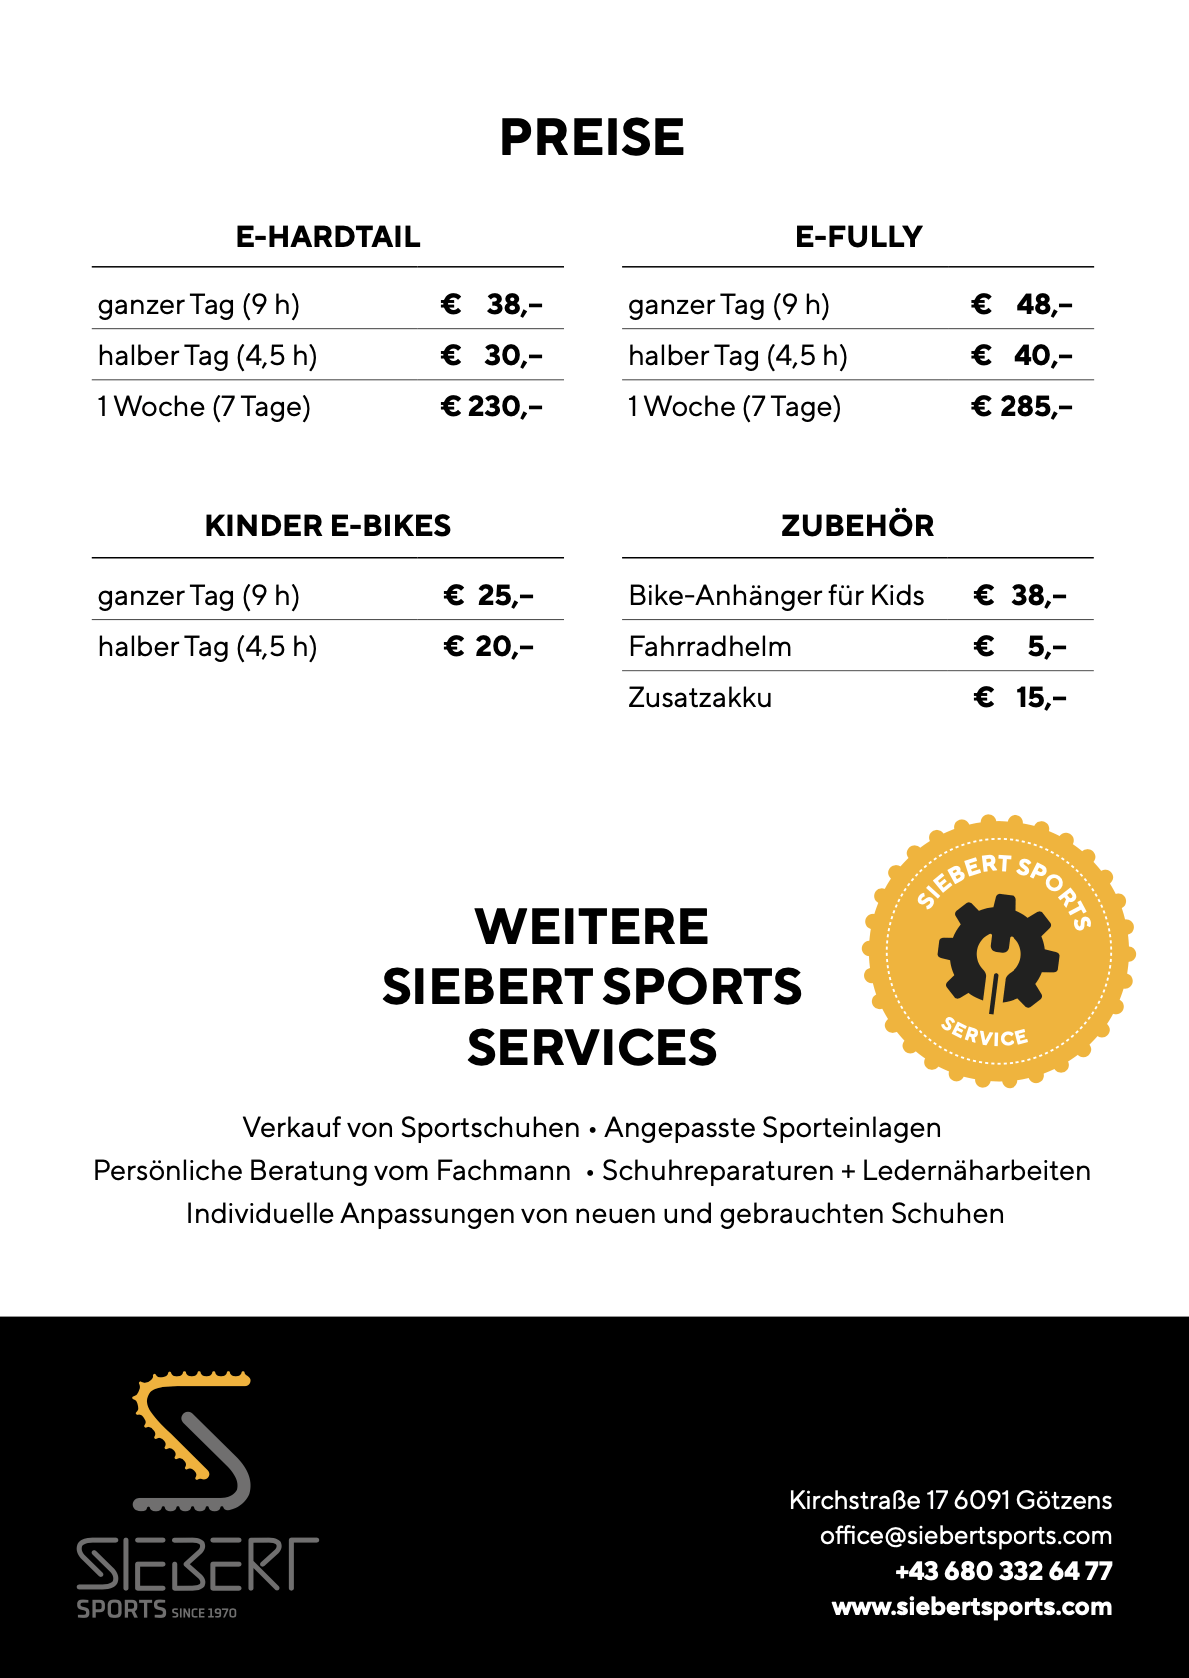 Siebert Sports E-Bike-Verleih Preise